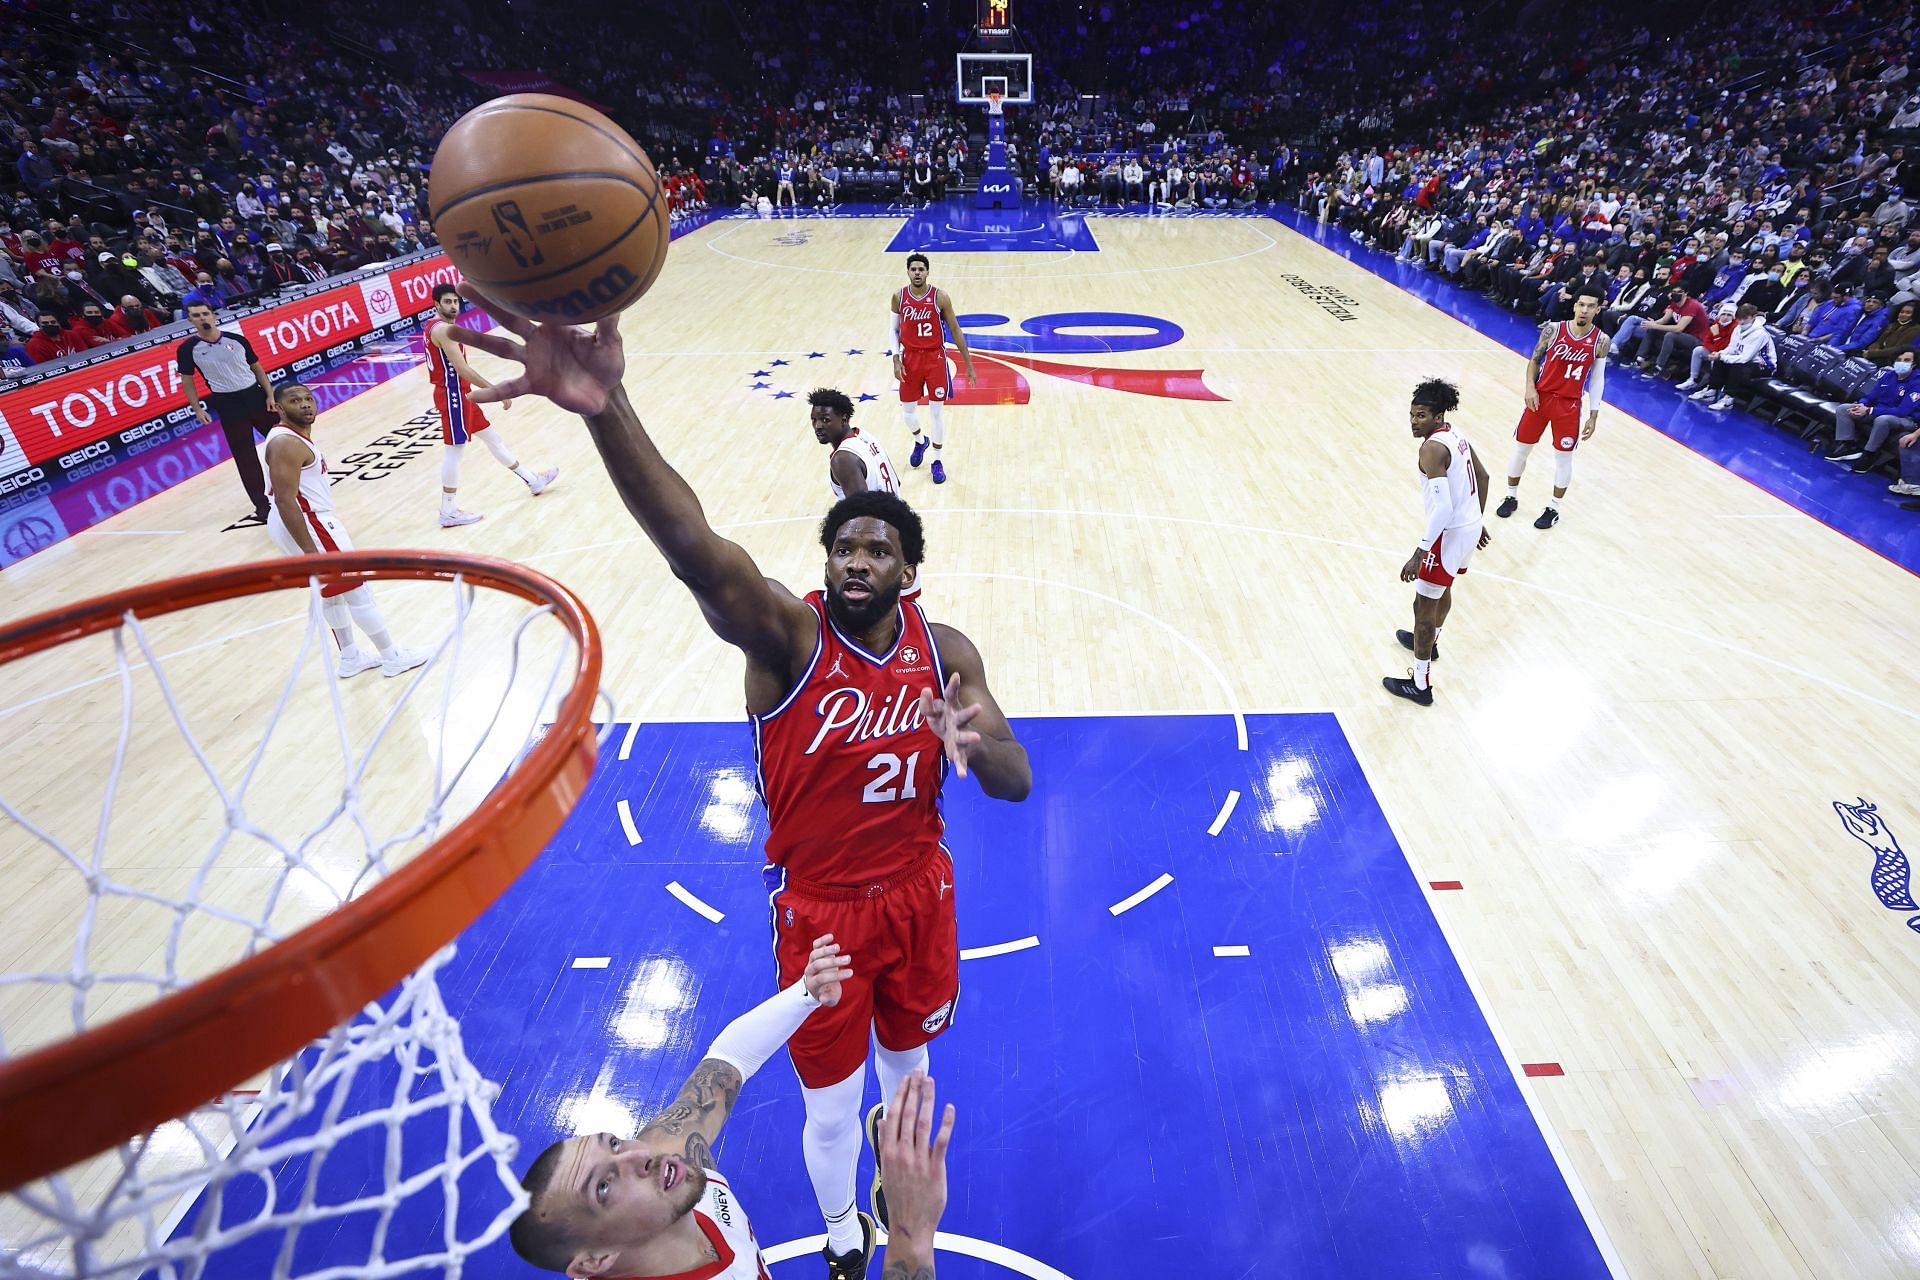 Philadelphia 76ers big man Joel Embiid puts up a shot against the Houston Rockets.